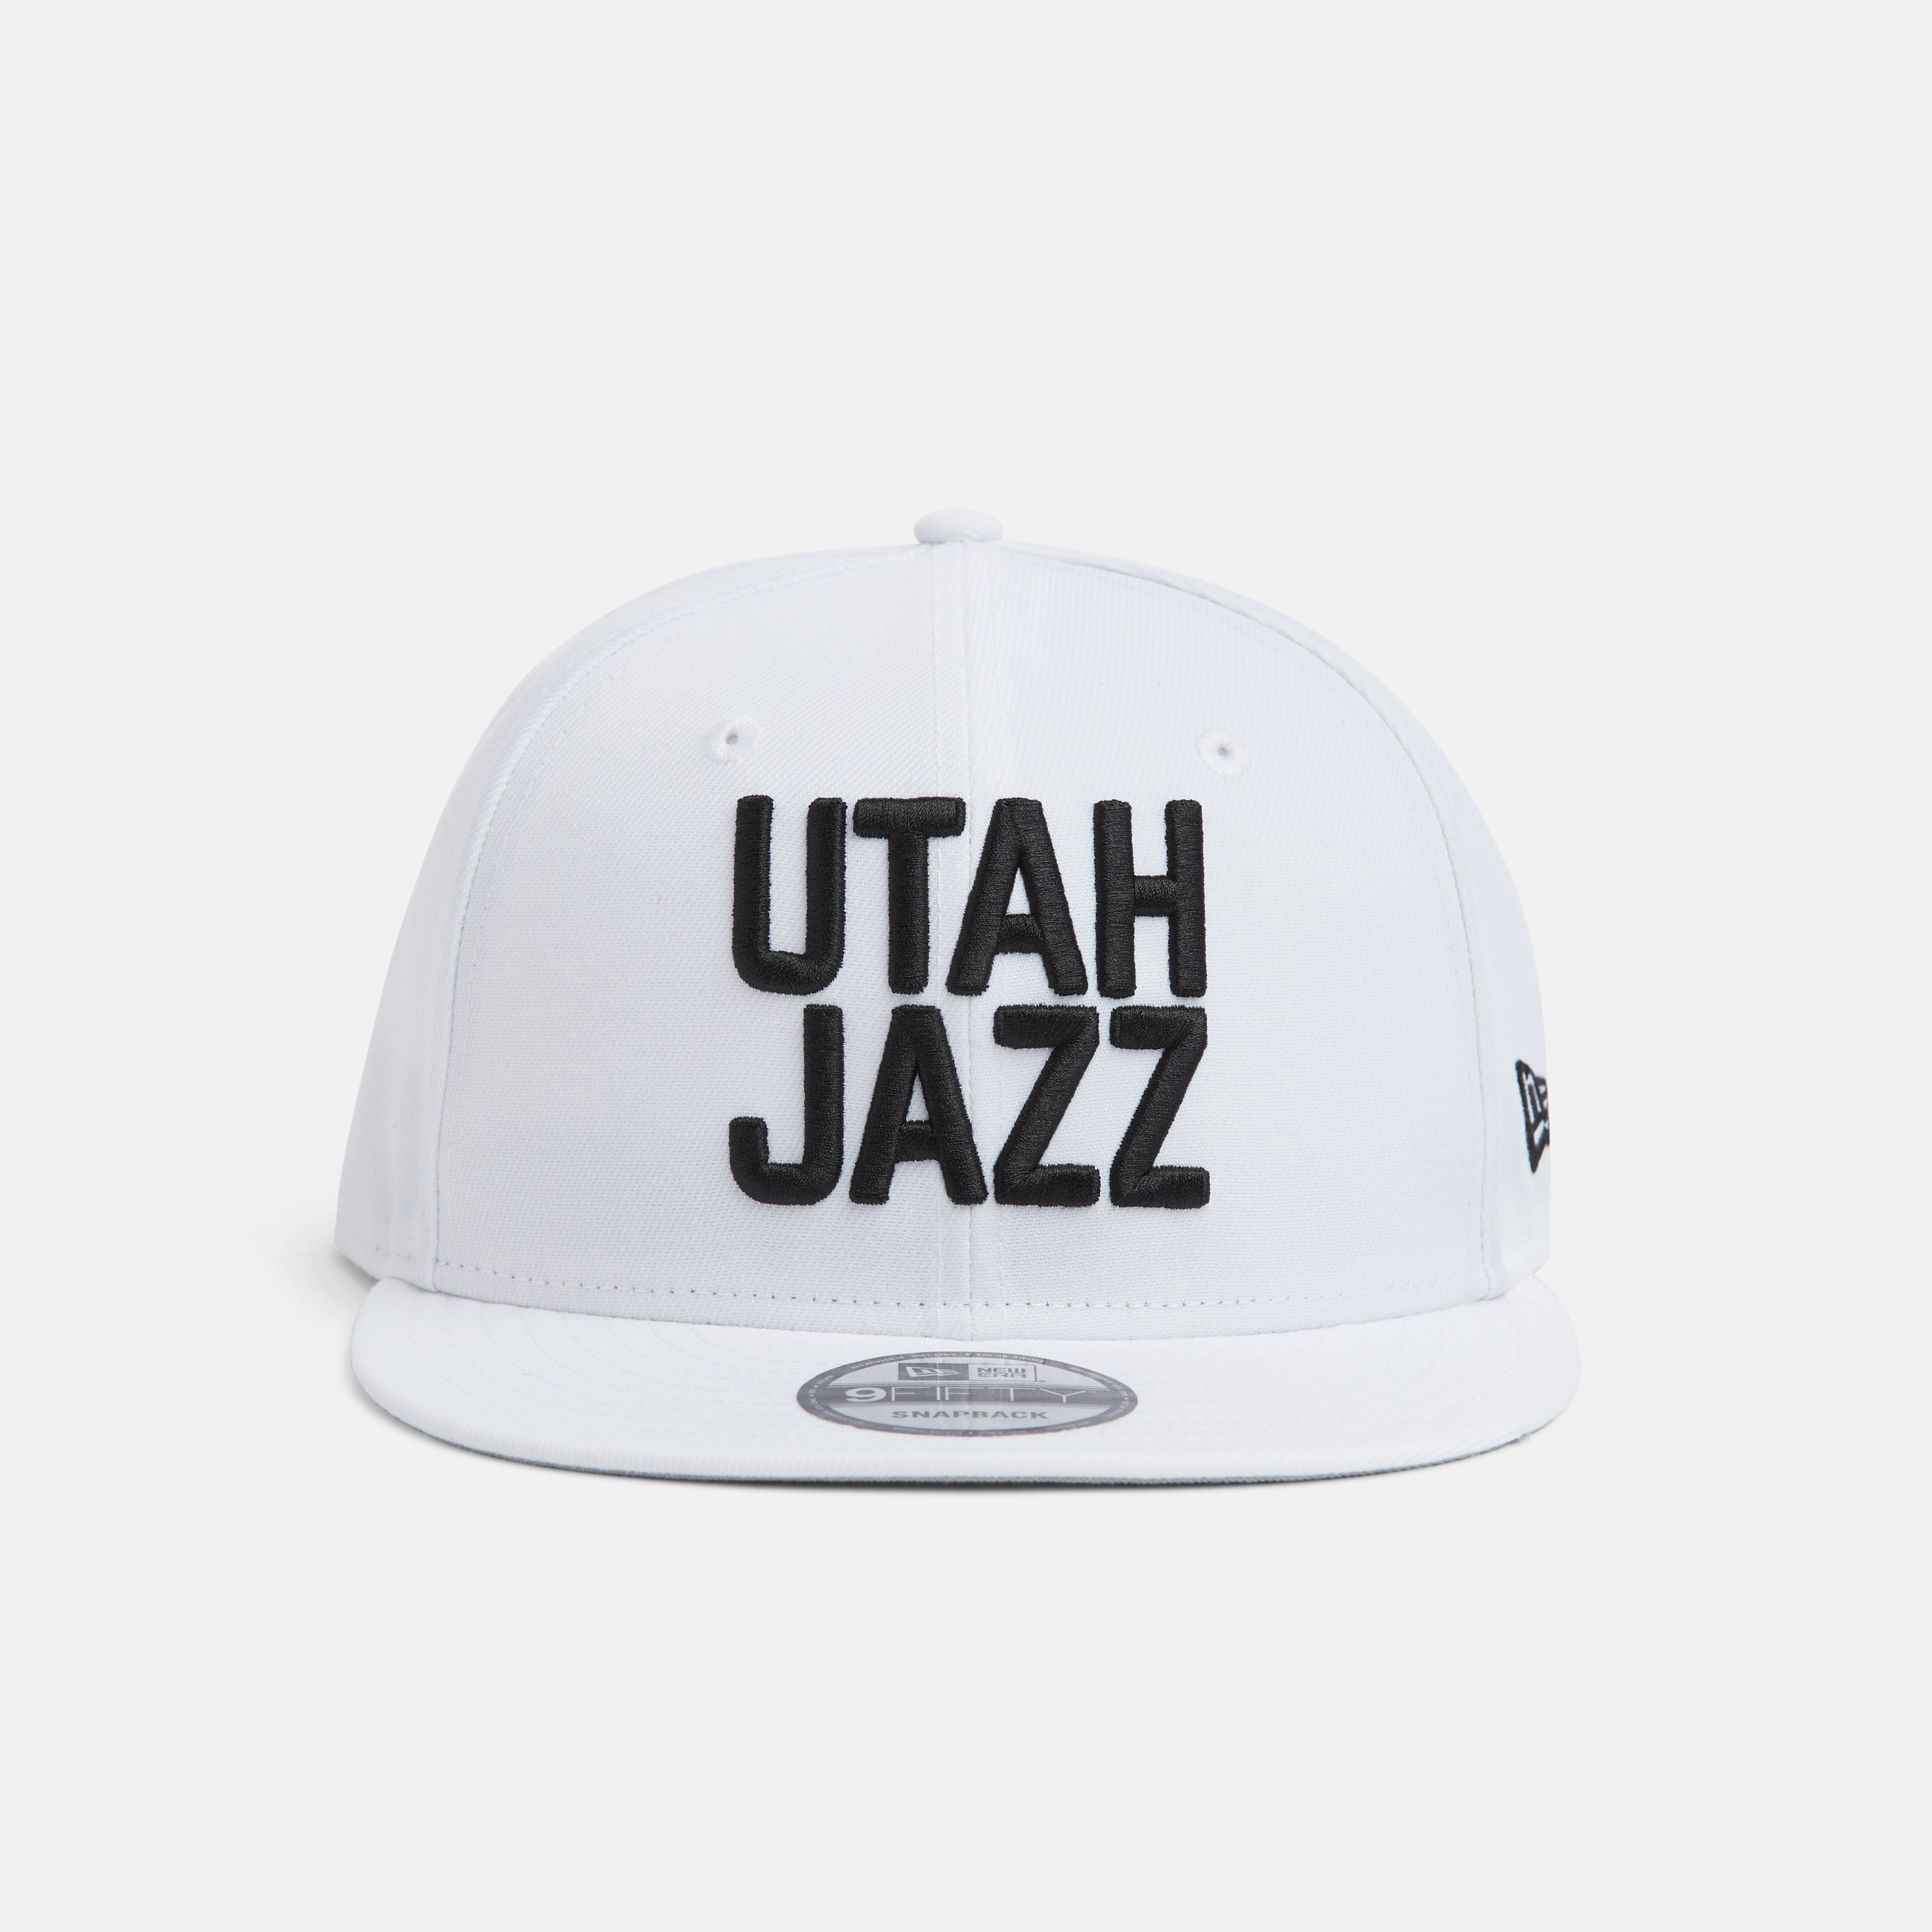 Front white 950 with black stacked Utah Jazz wordmark.